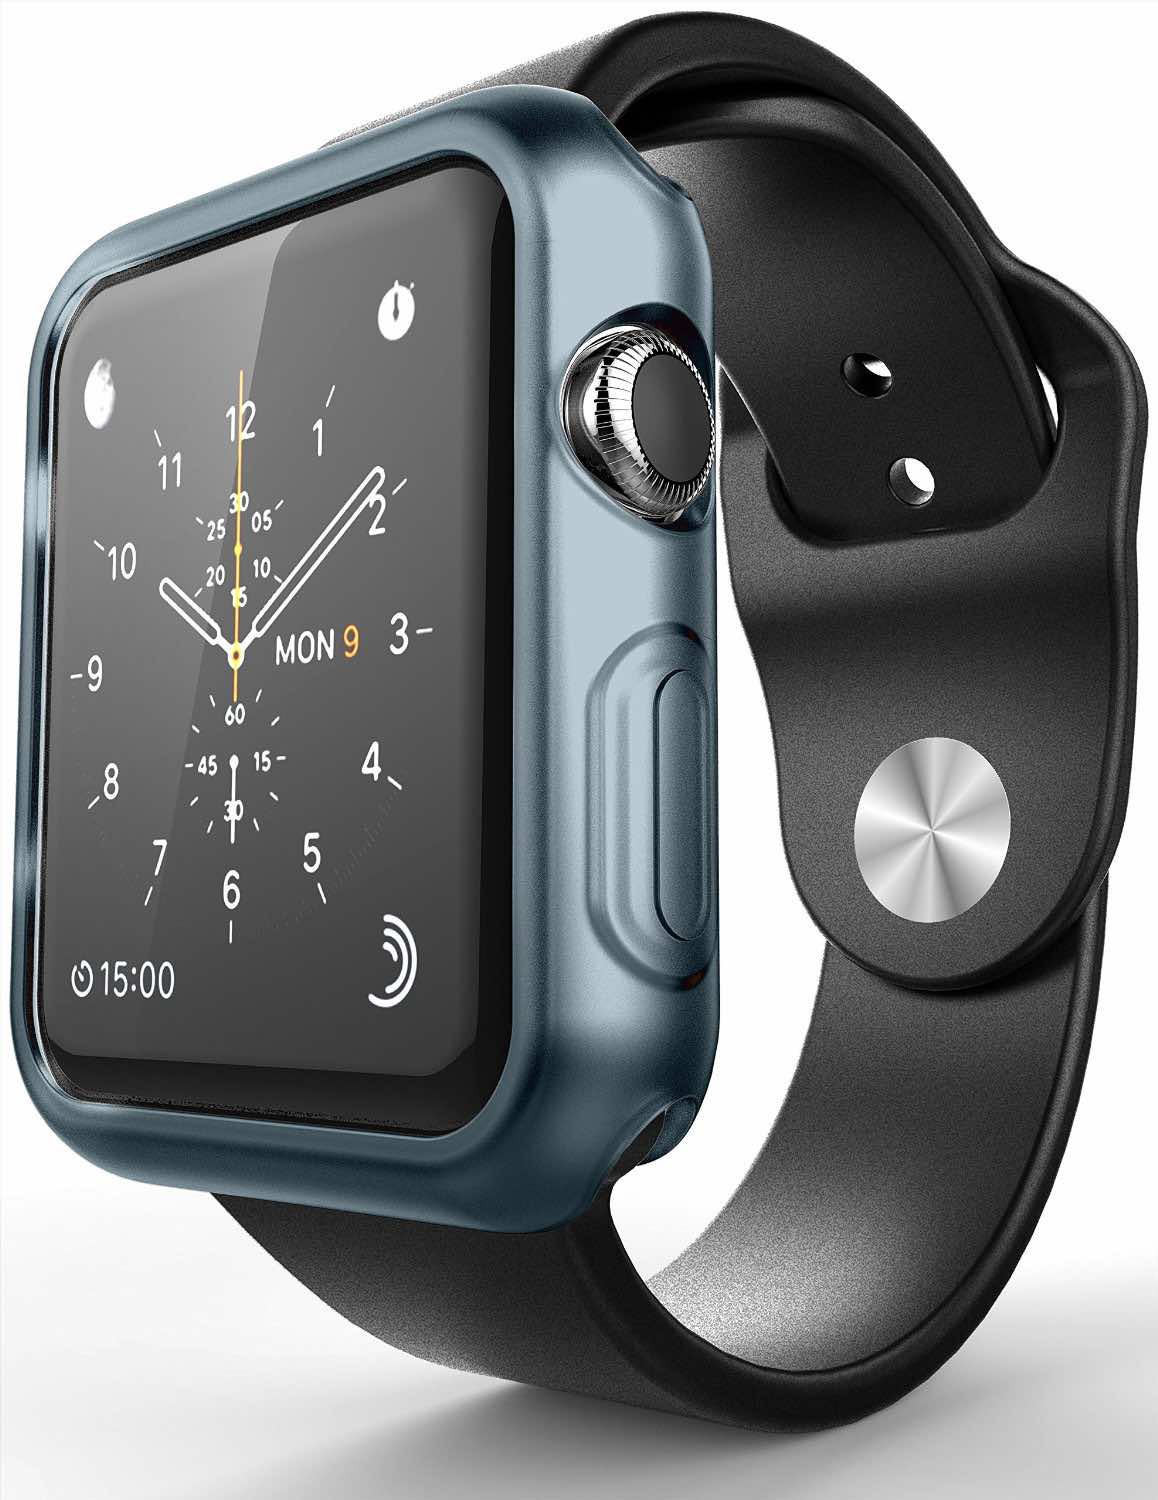 Best Apple Watch Cases 8 